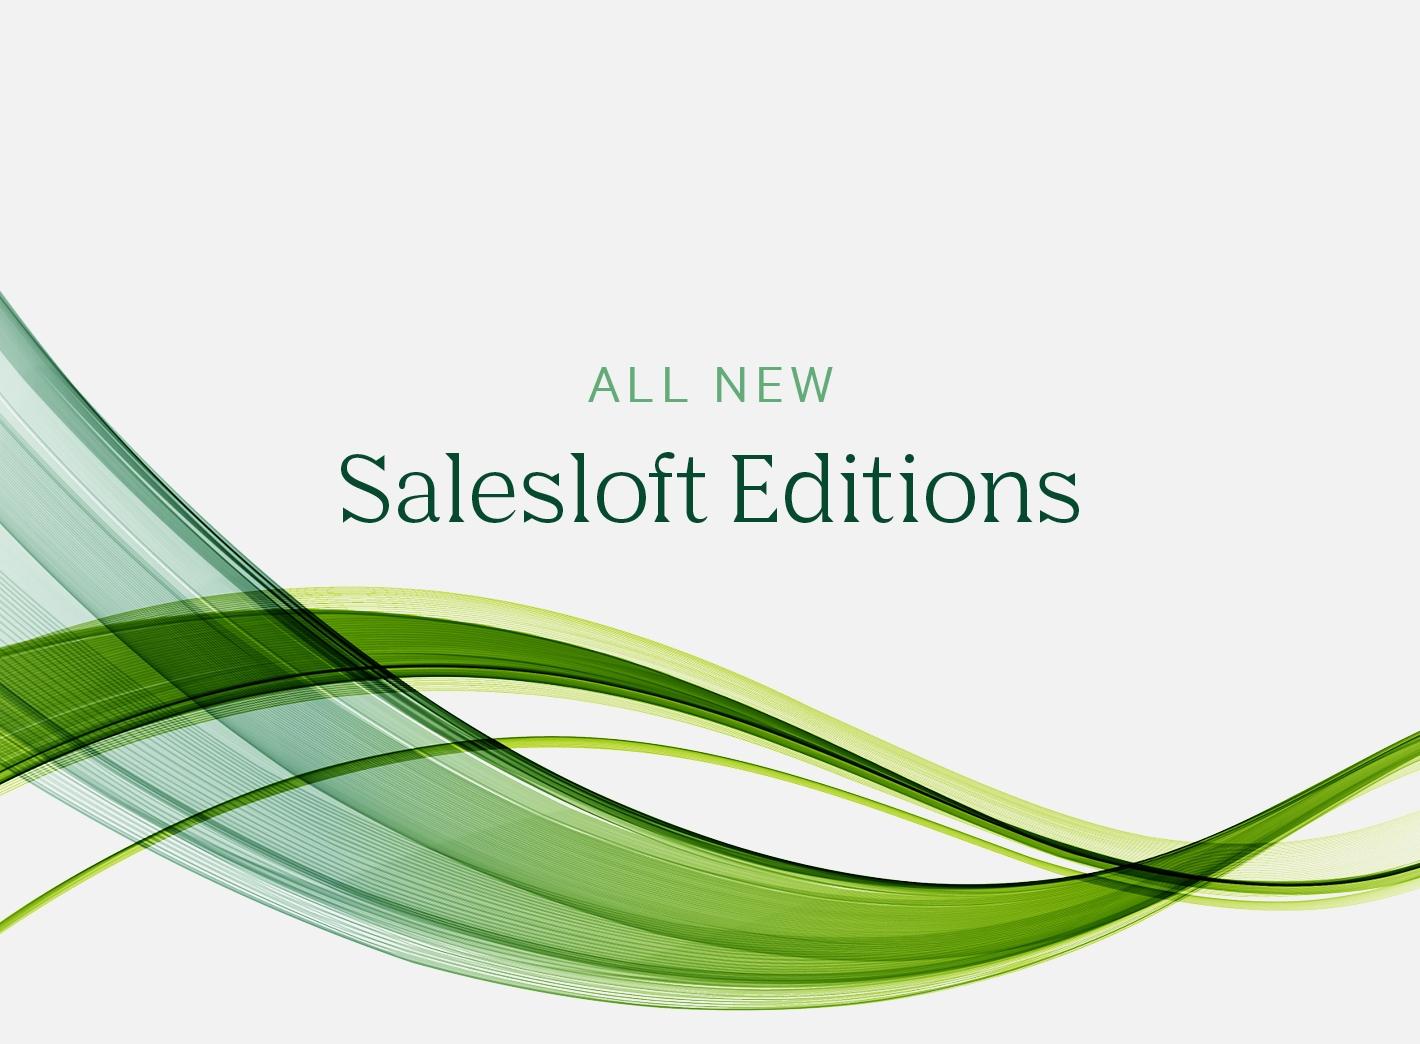 "All New Salesloft Editions"